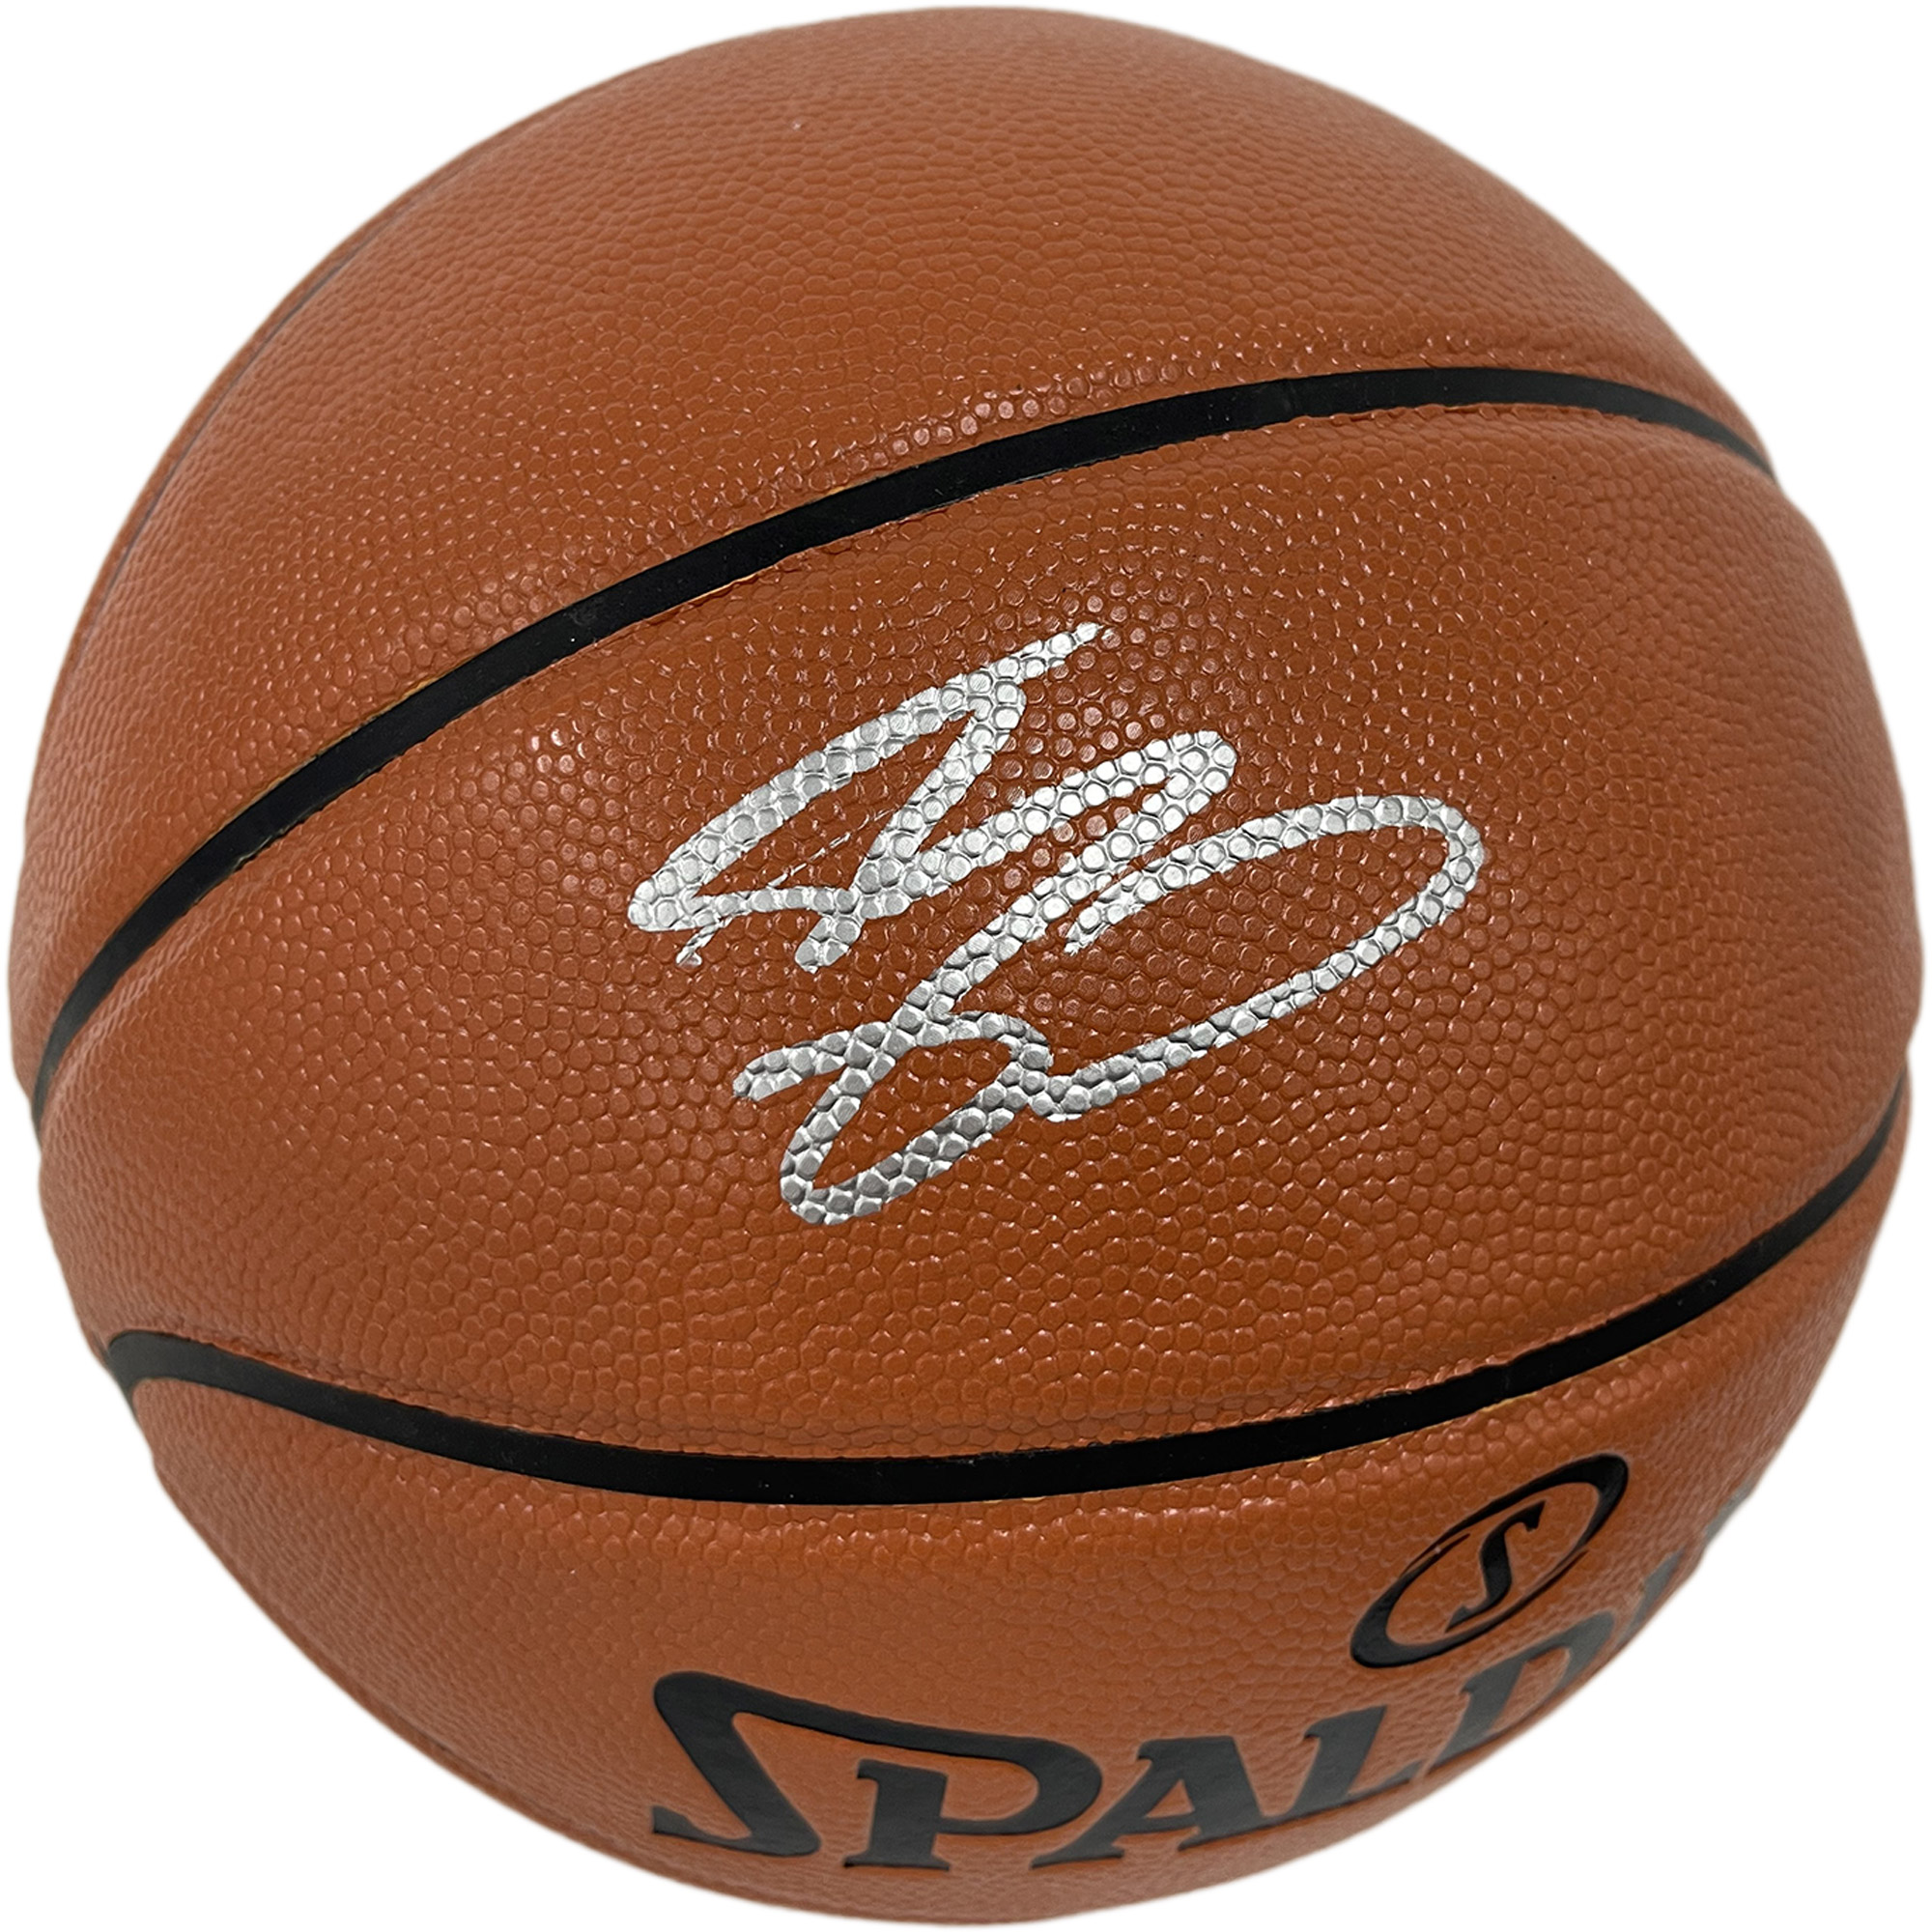 Basketball – Shaquille O’Neal Hand Signed Spalding Basketb...